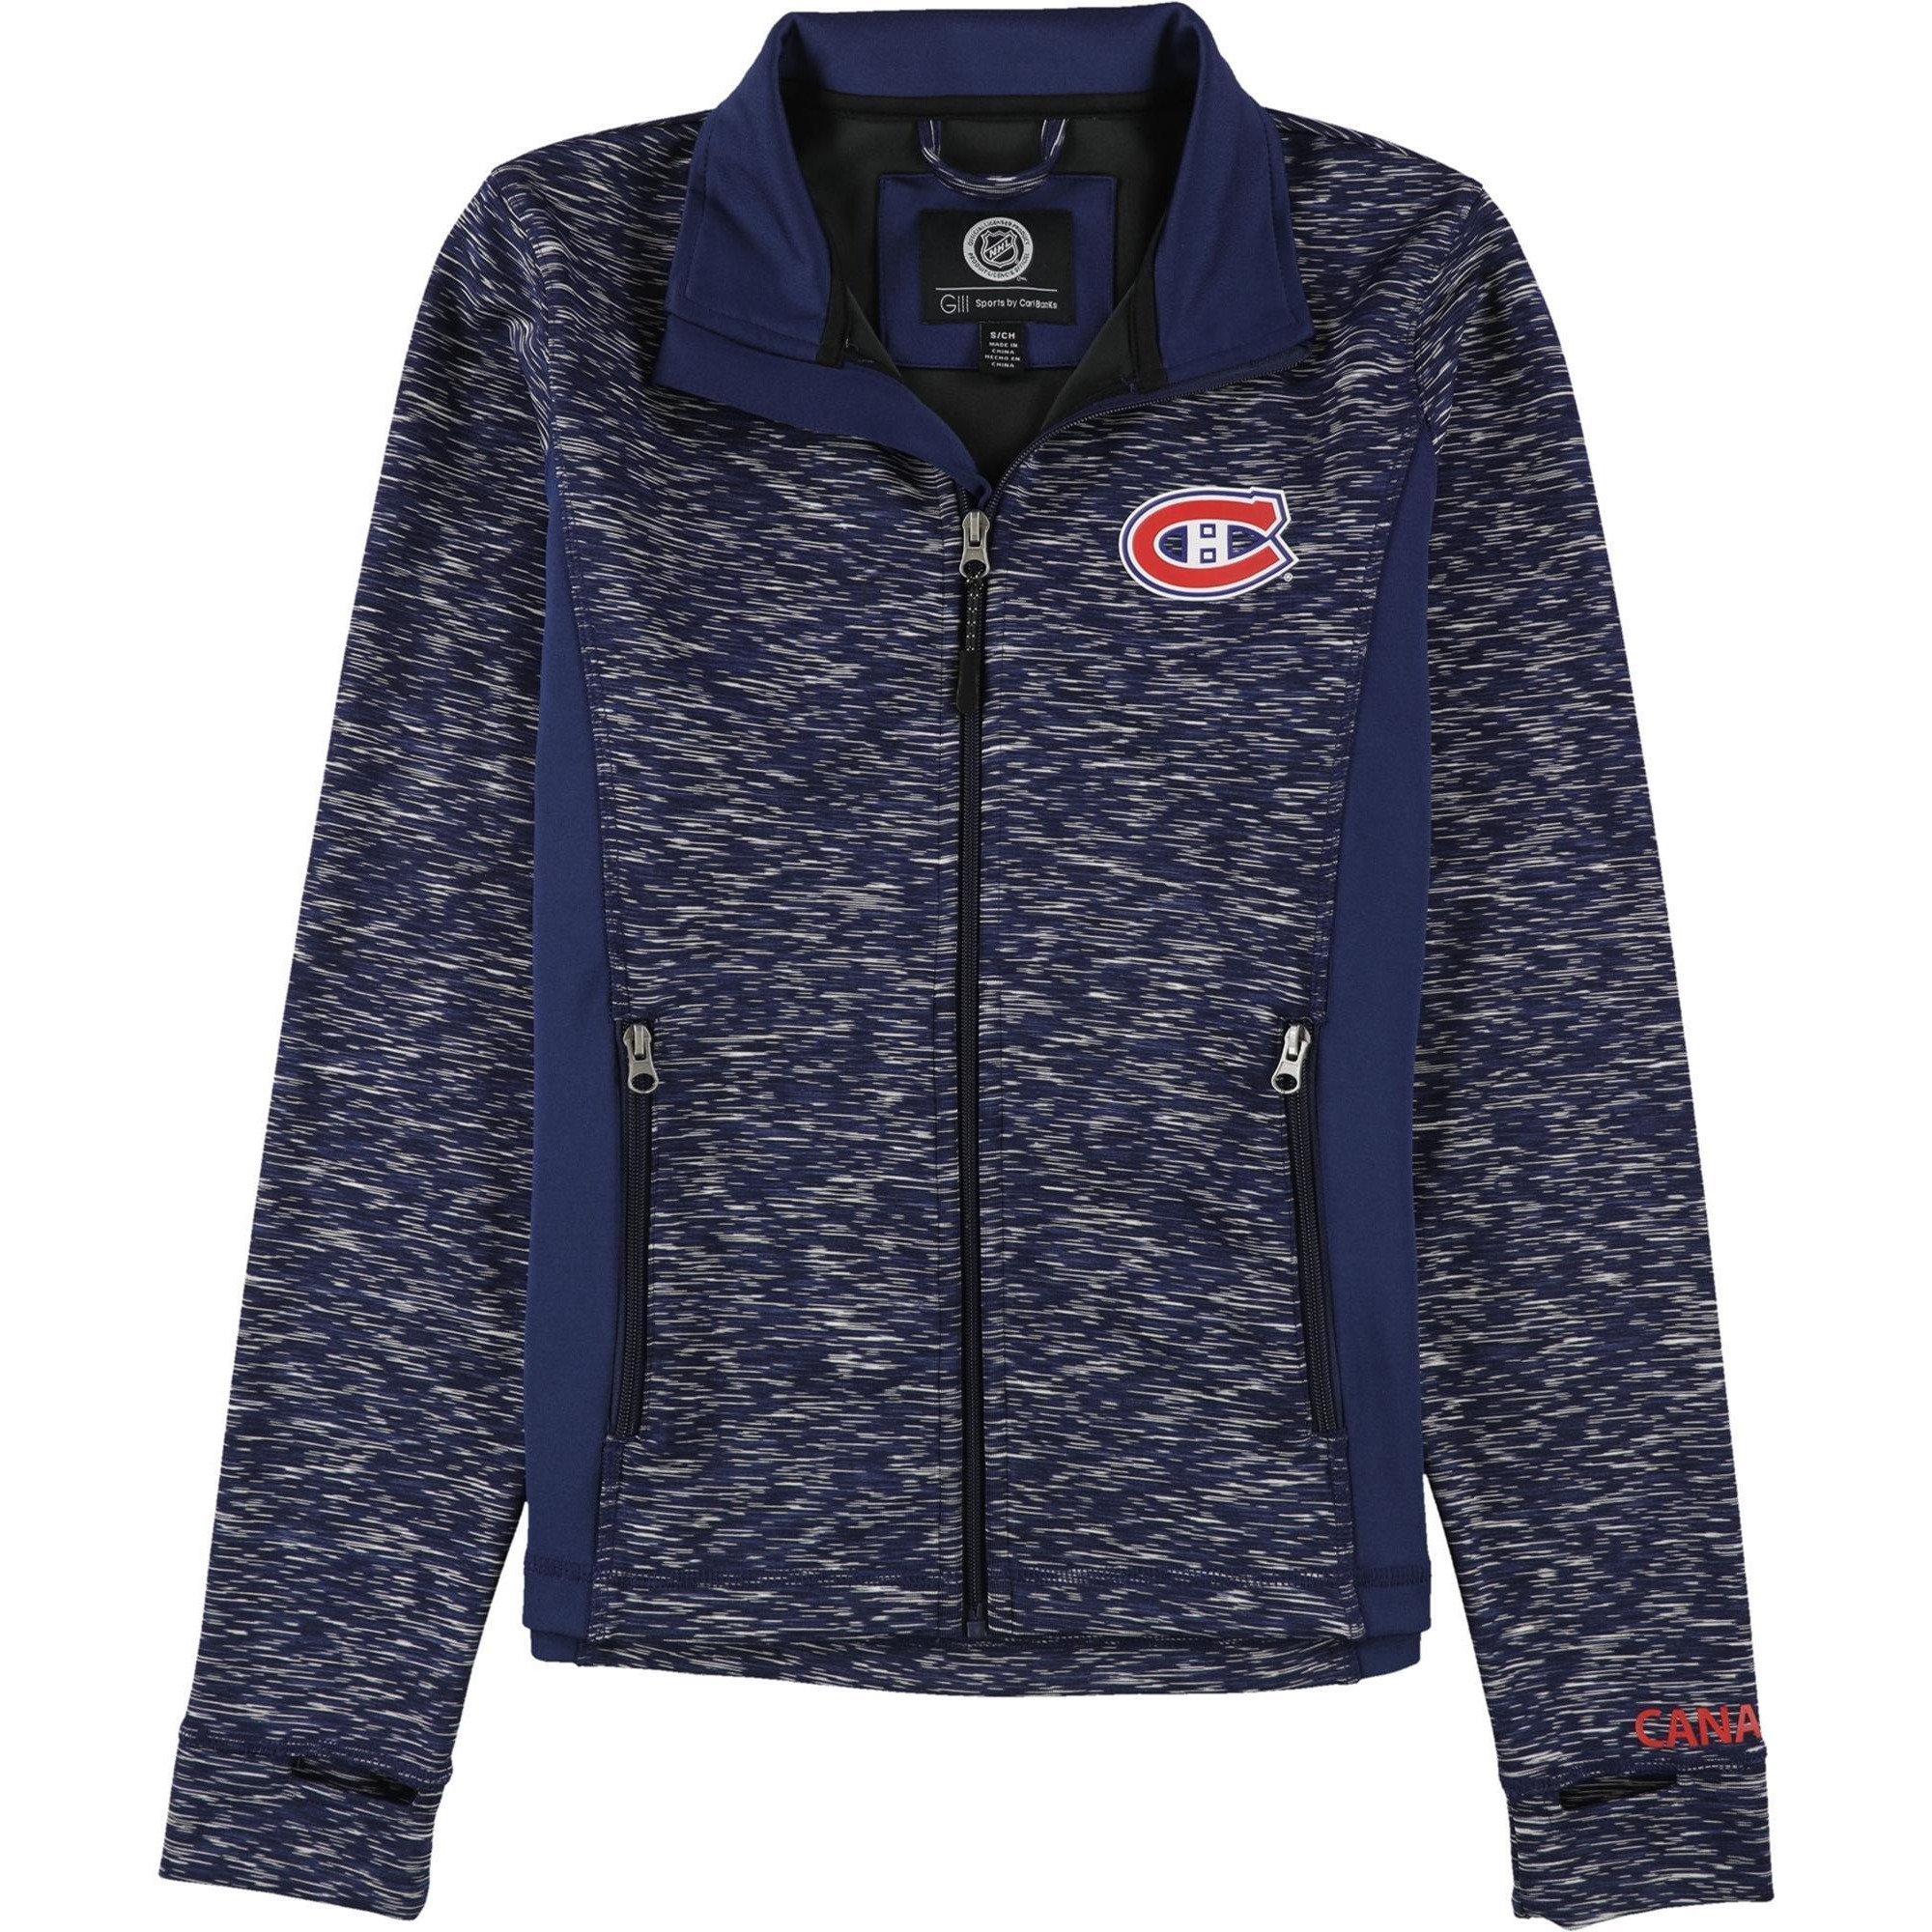 G-III Sports Womens Montreal Canadiens Track Jacket Sweatshirt, Style # NM71N130